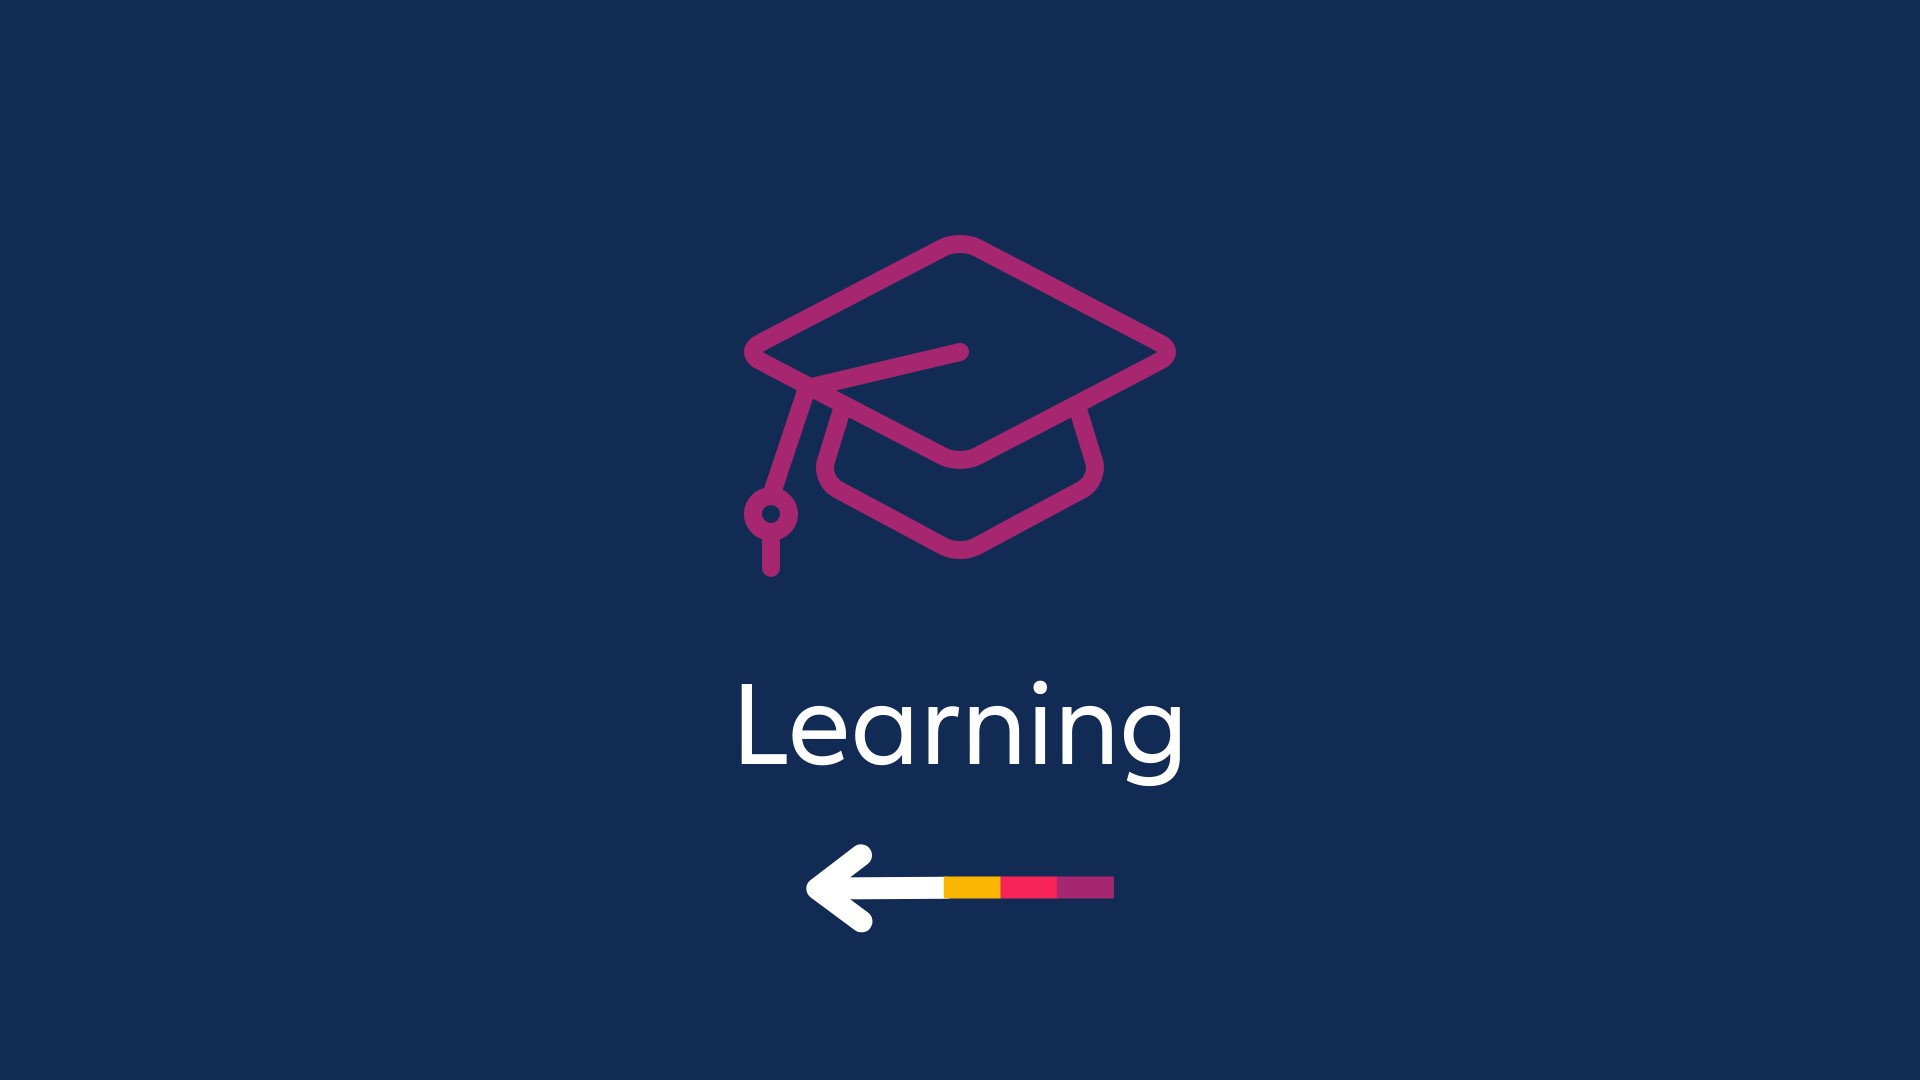 Learning, university graduation cap icon